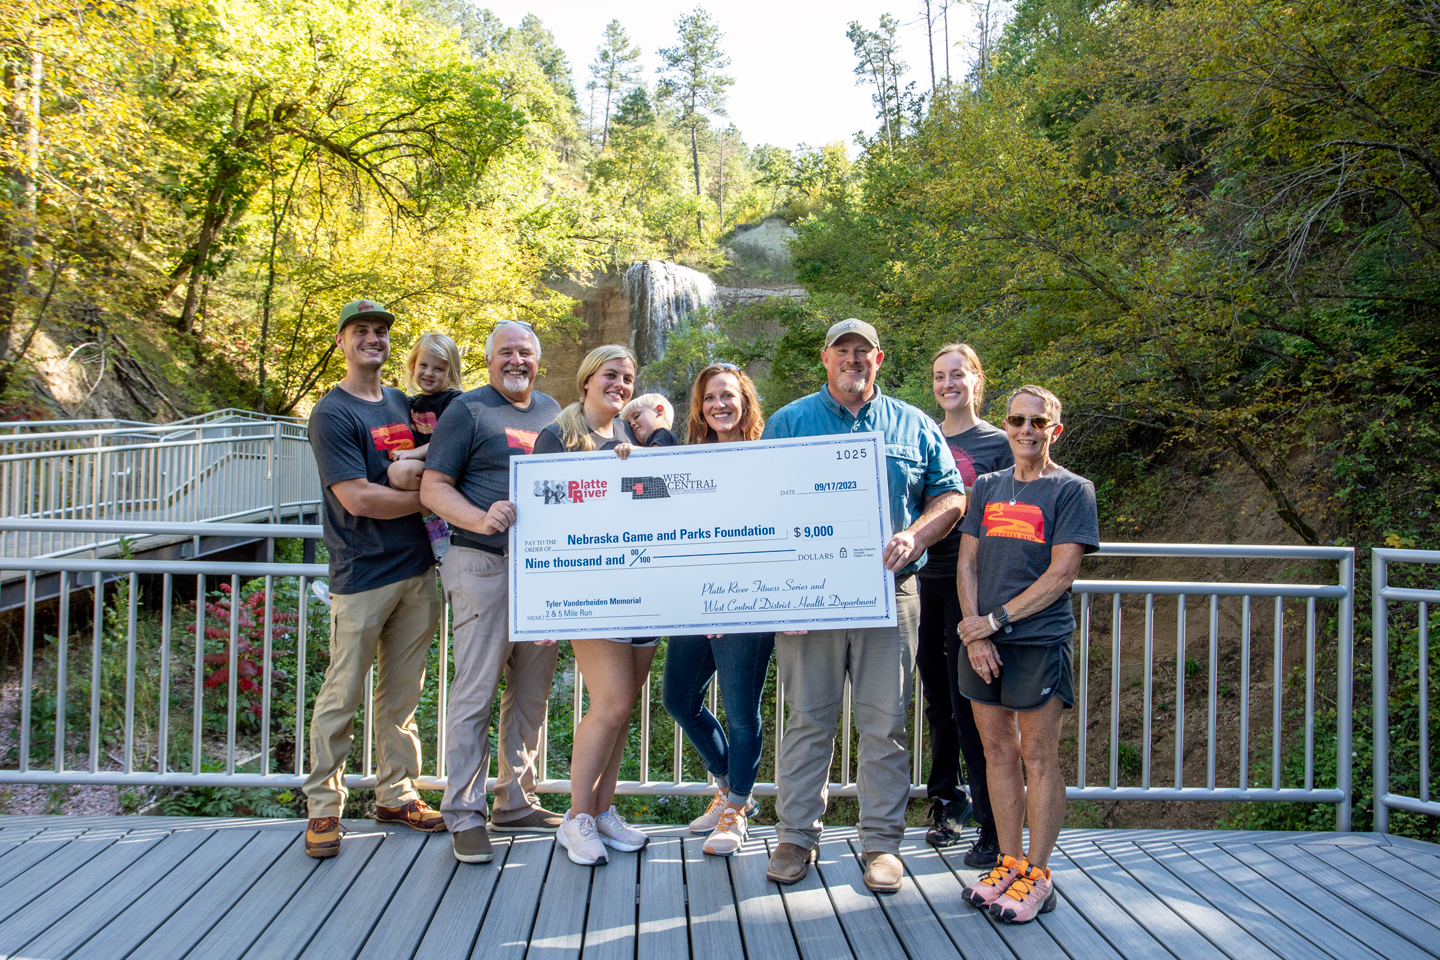 Read More: Memorial run raises $9K for Smith Falls trails